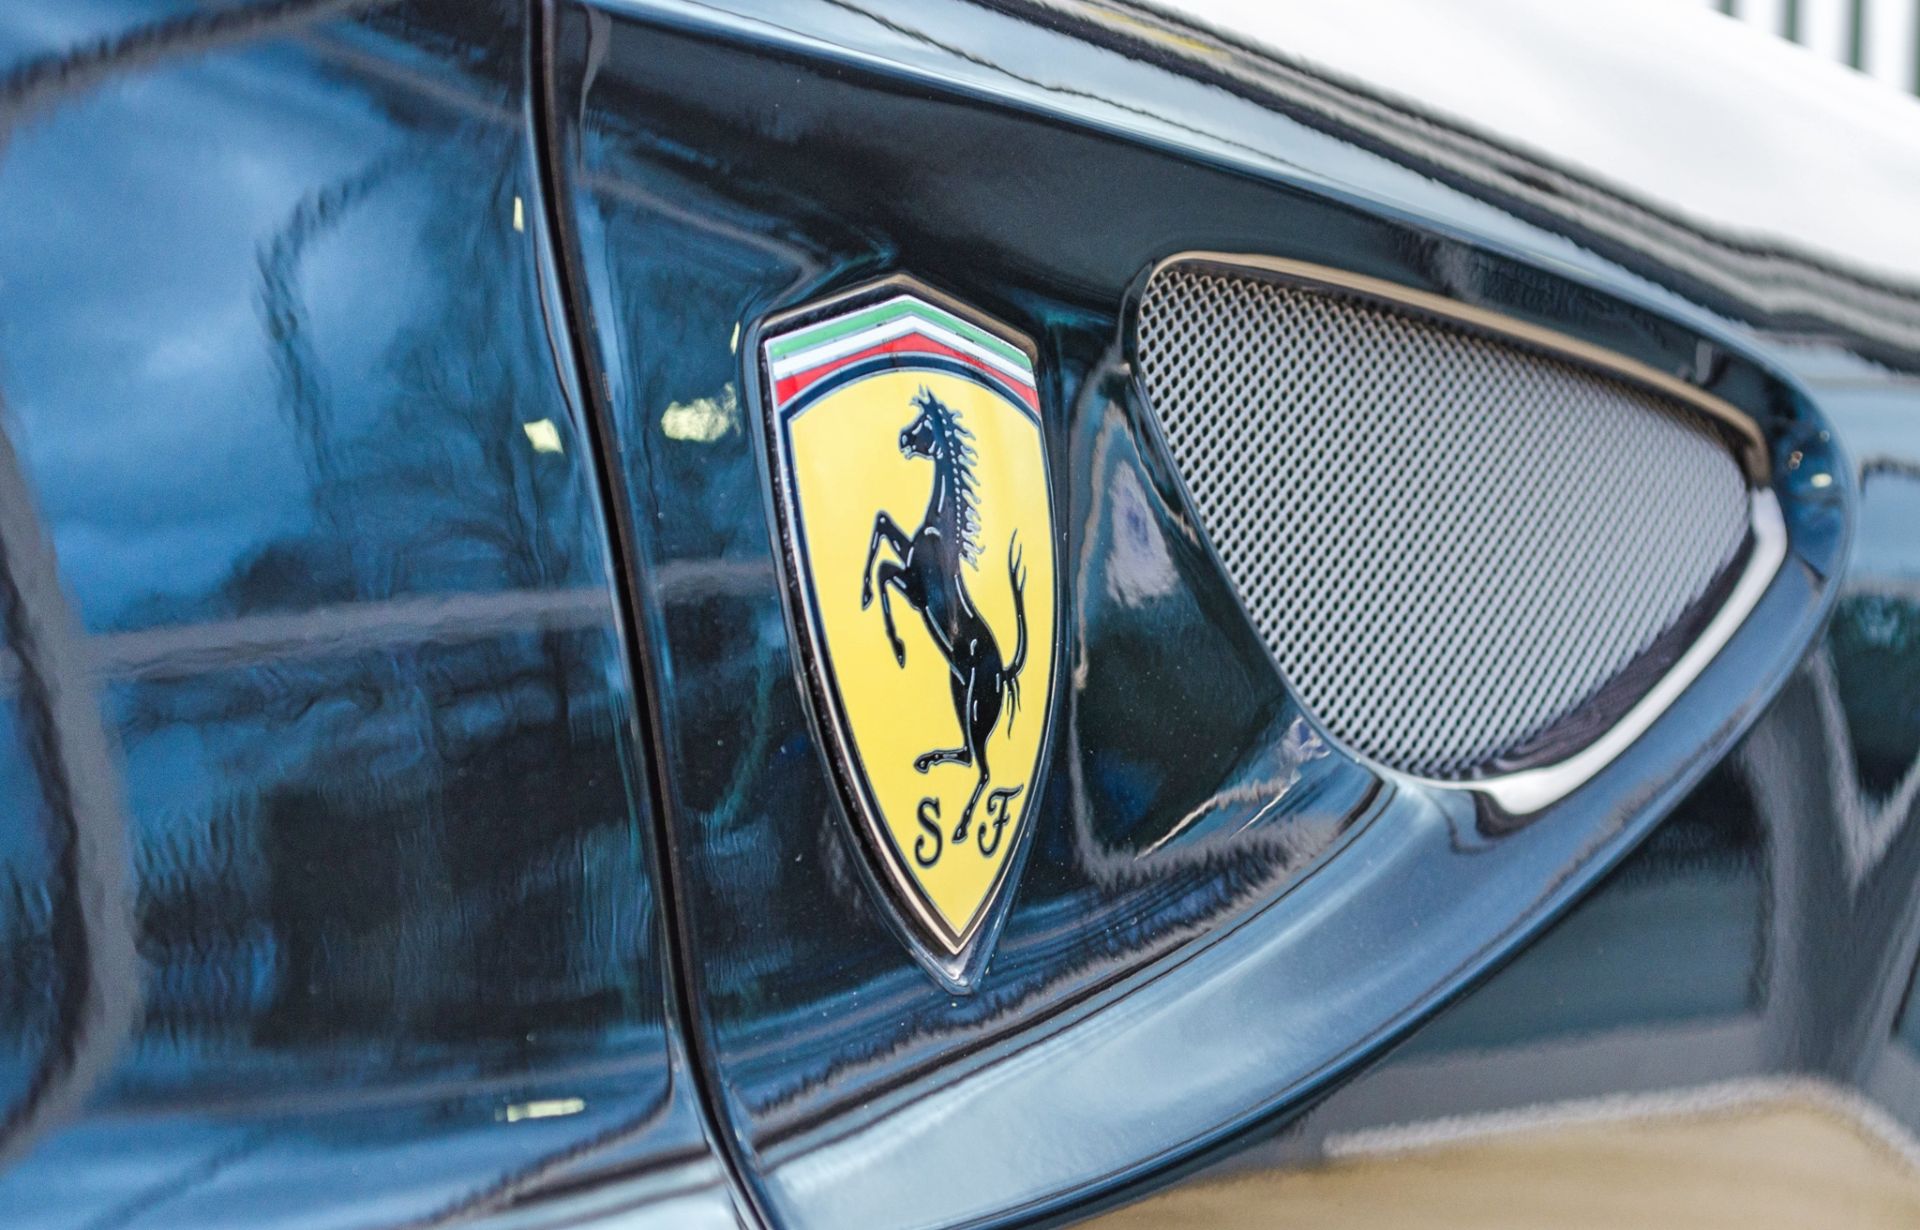 2014 Ferrari FF 6262cc V12 3 door coupe - Image 31 of 74